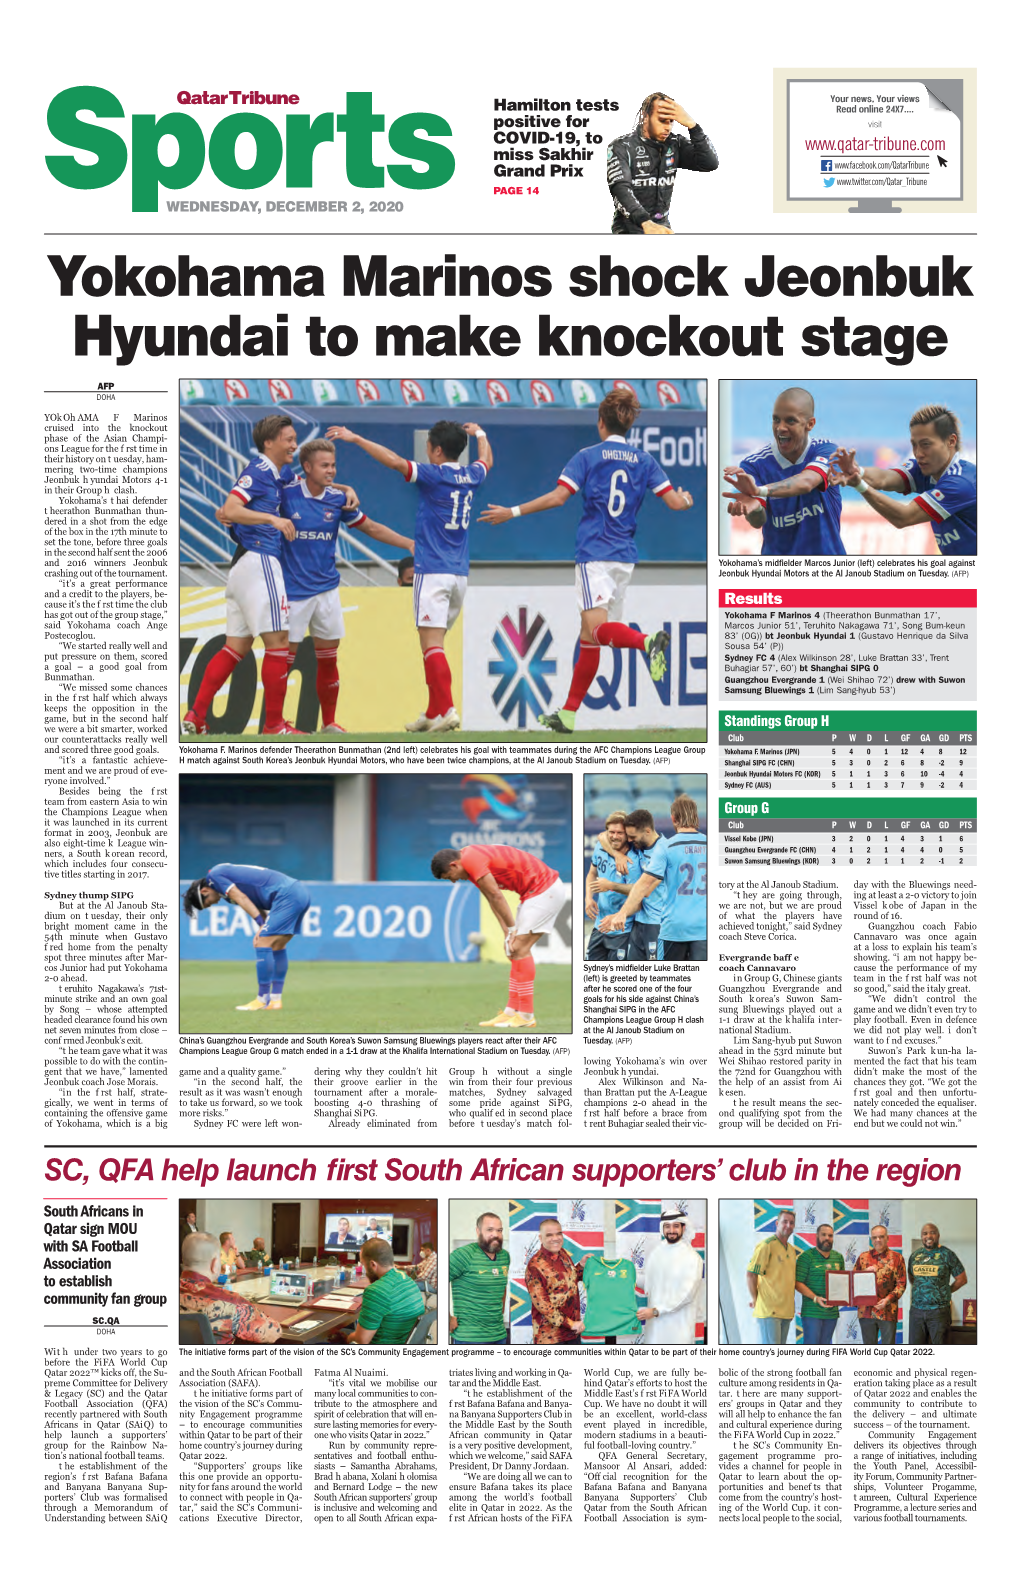 Yokohama Marinos Shock Jeonbuk Hyundai to Make Knockout Stage